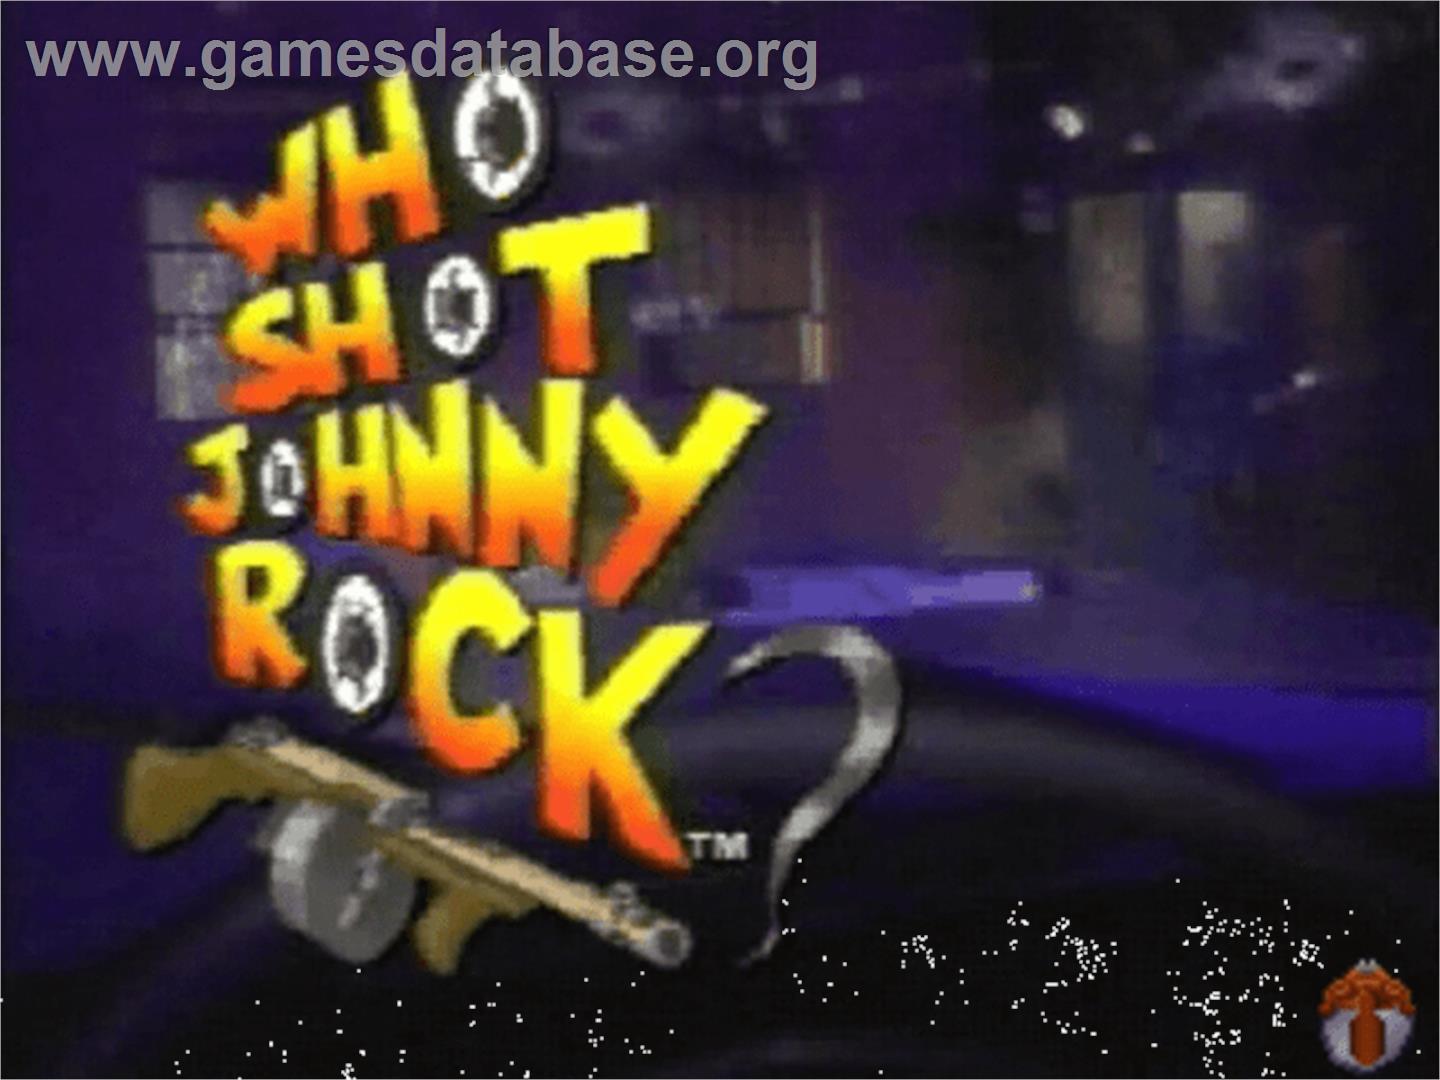 Who Shot Johnny Rock? v1.6 - Panasonic 3DO - Artwork - Title Screen